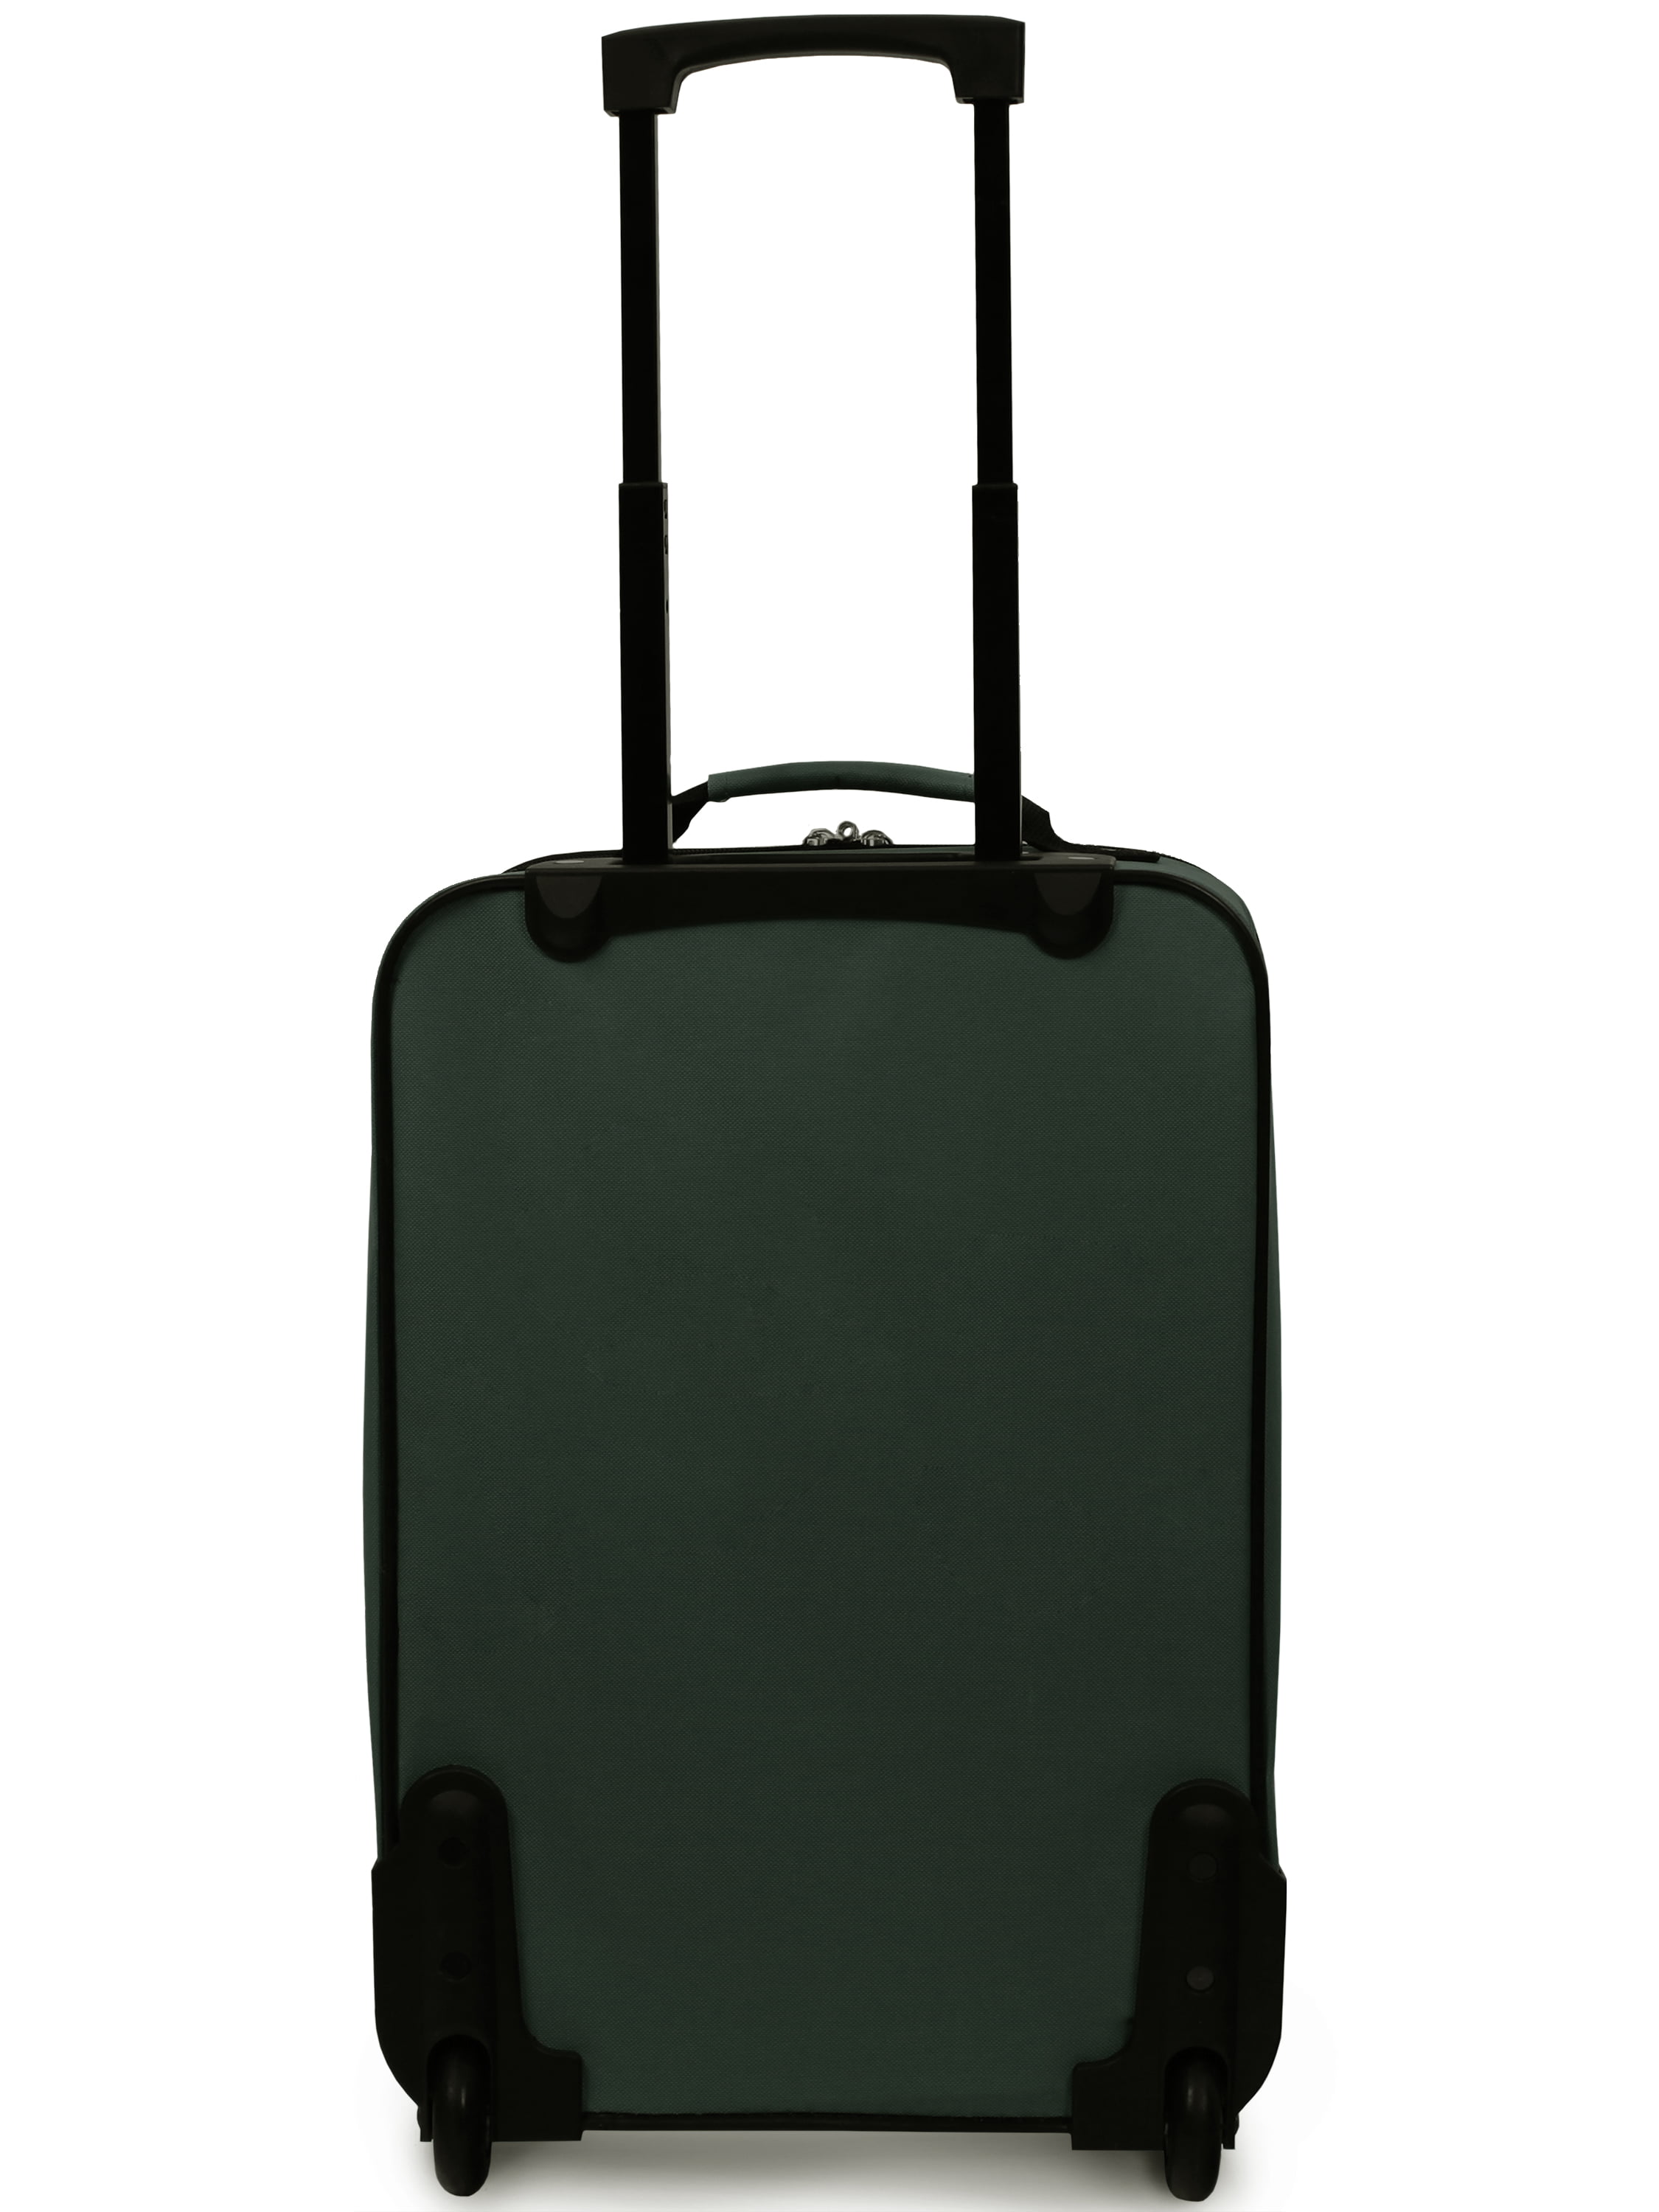 Black Protege 18 Pilot Case Carry On Luggage